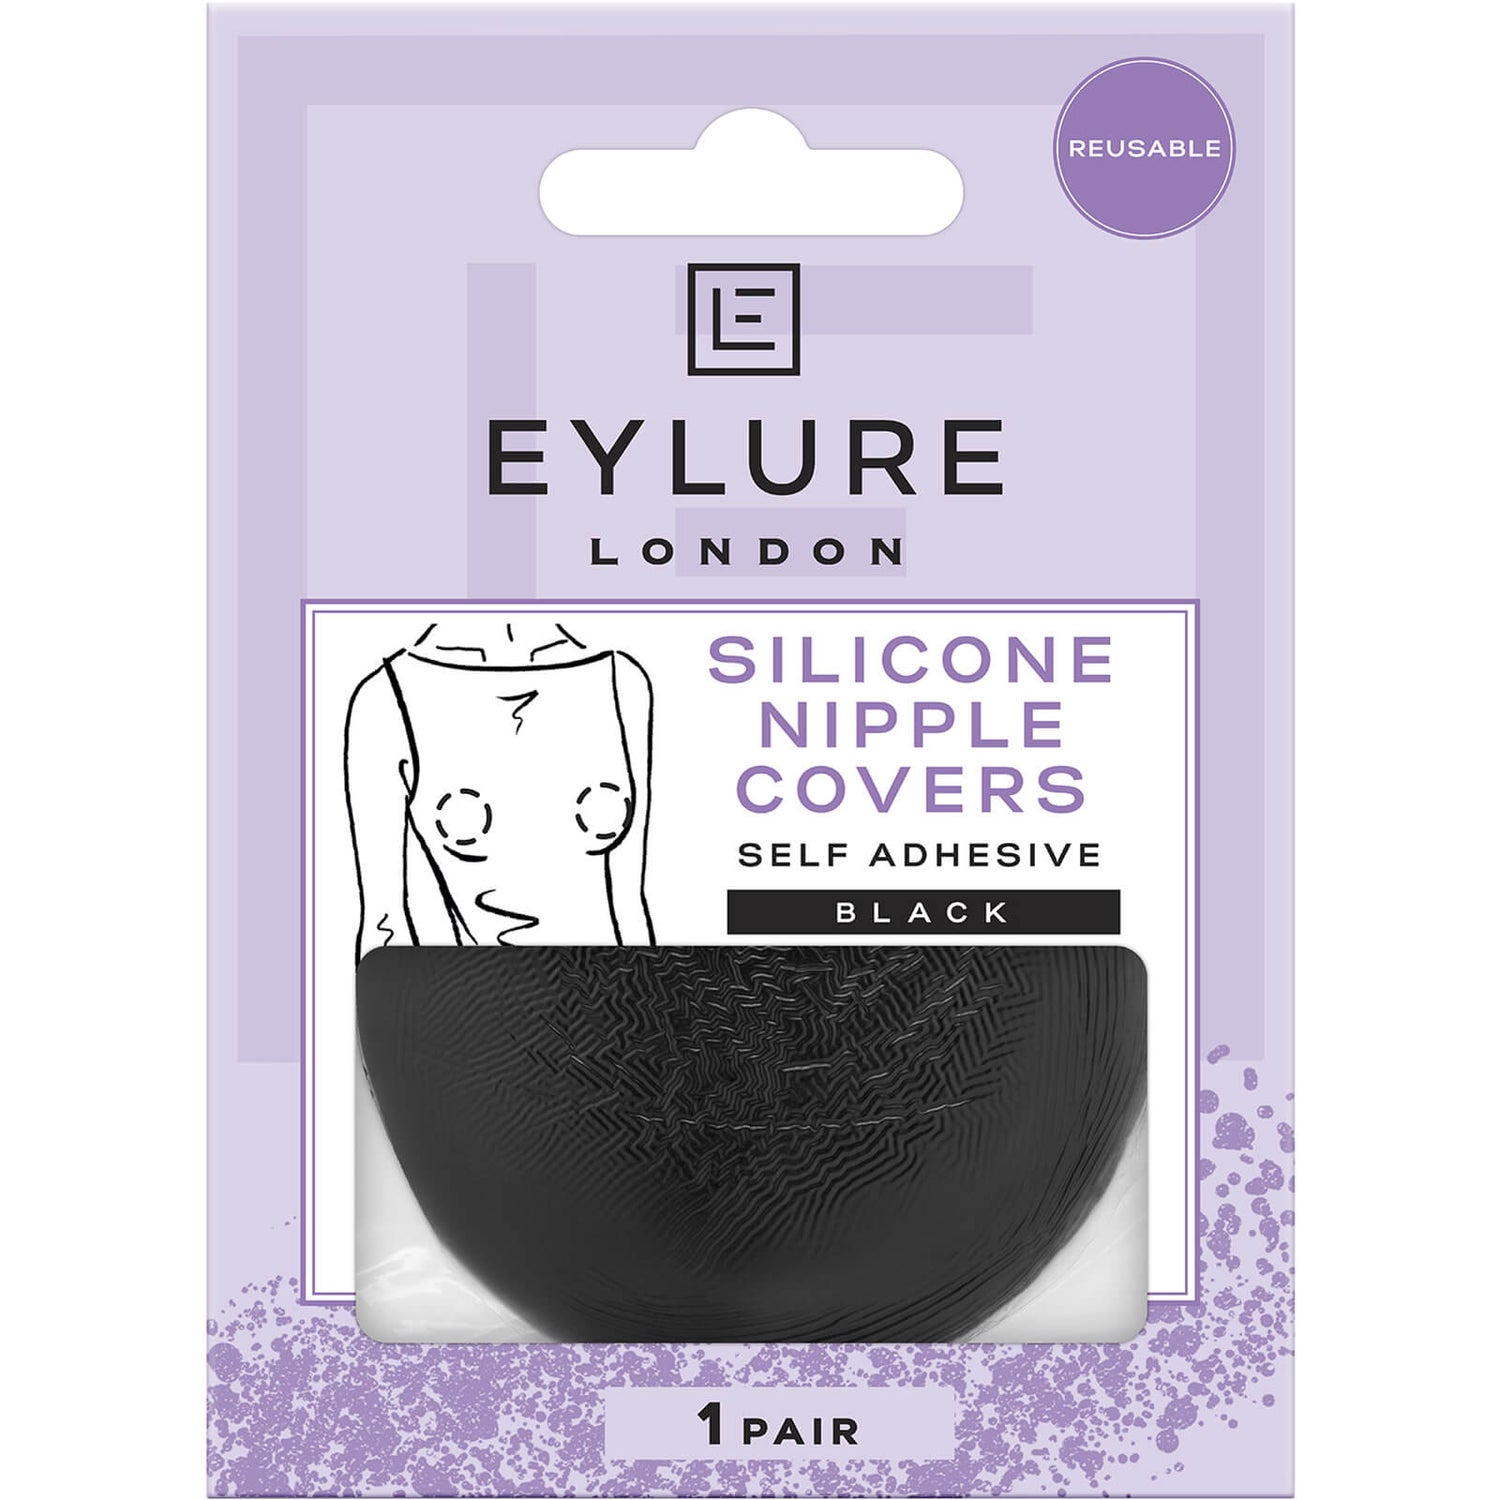 Eylure Silicone Nipple Cover - Dark